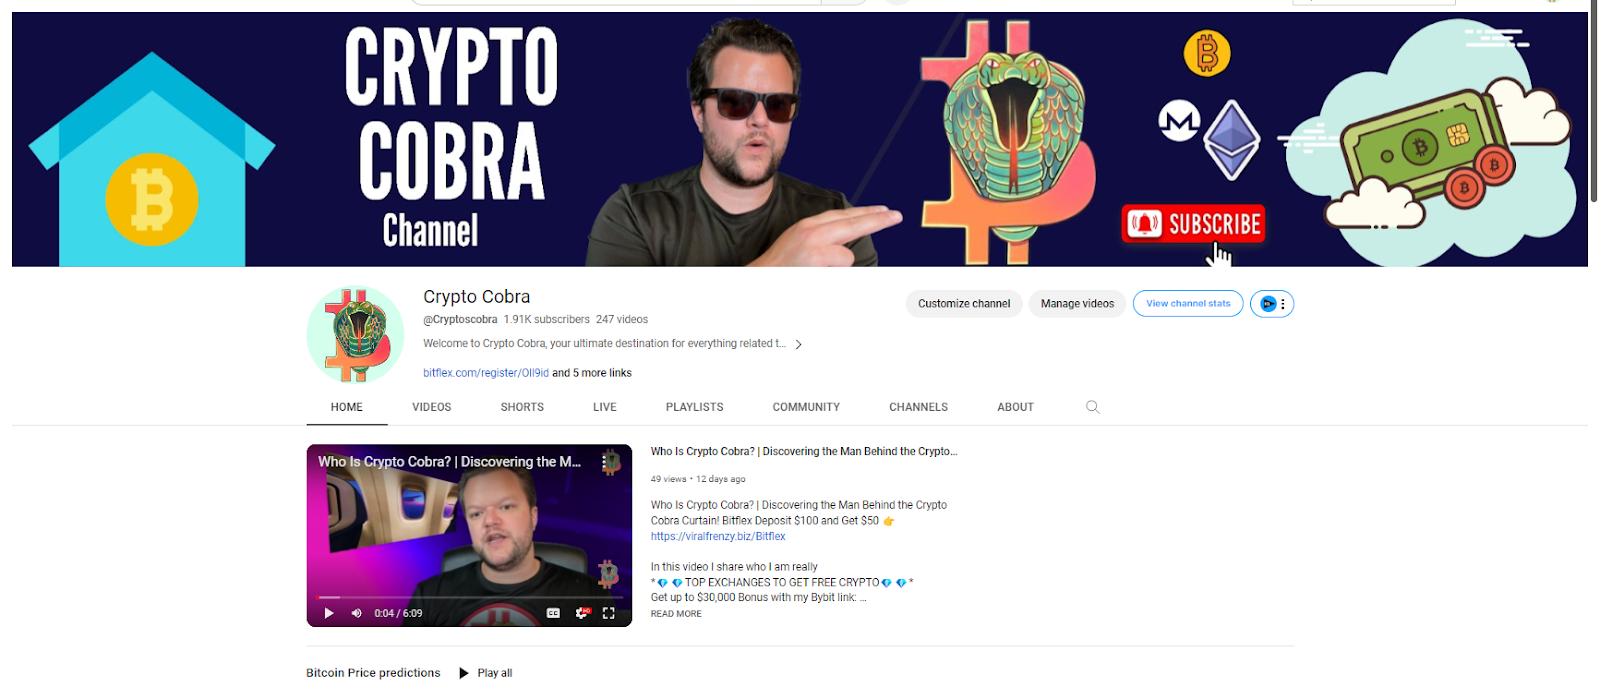 crypto cobra on youtube | crypto project reviews